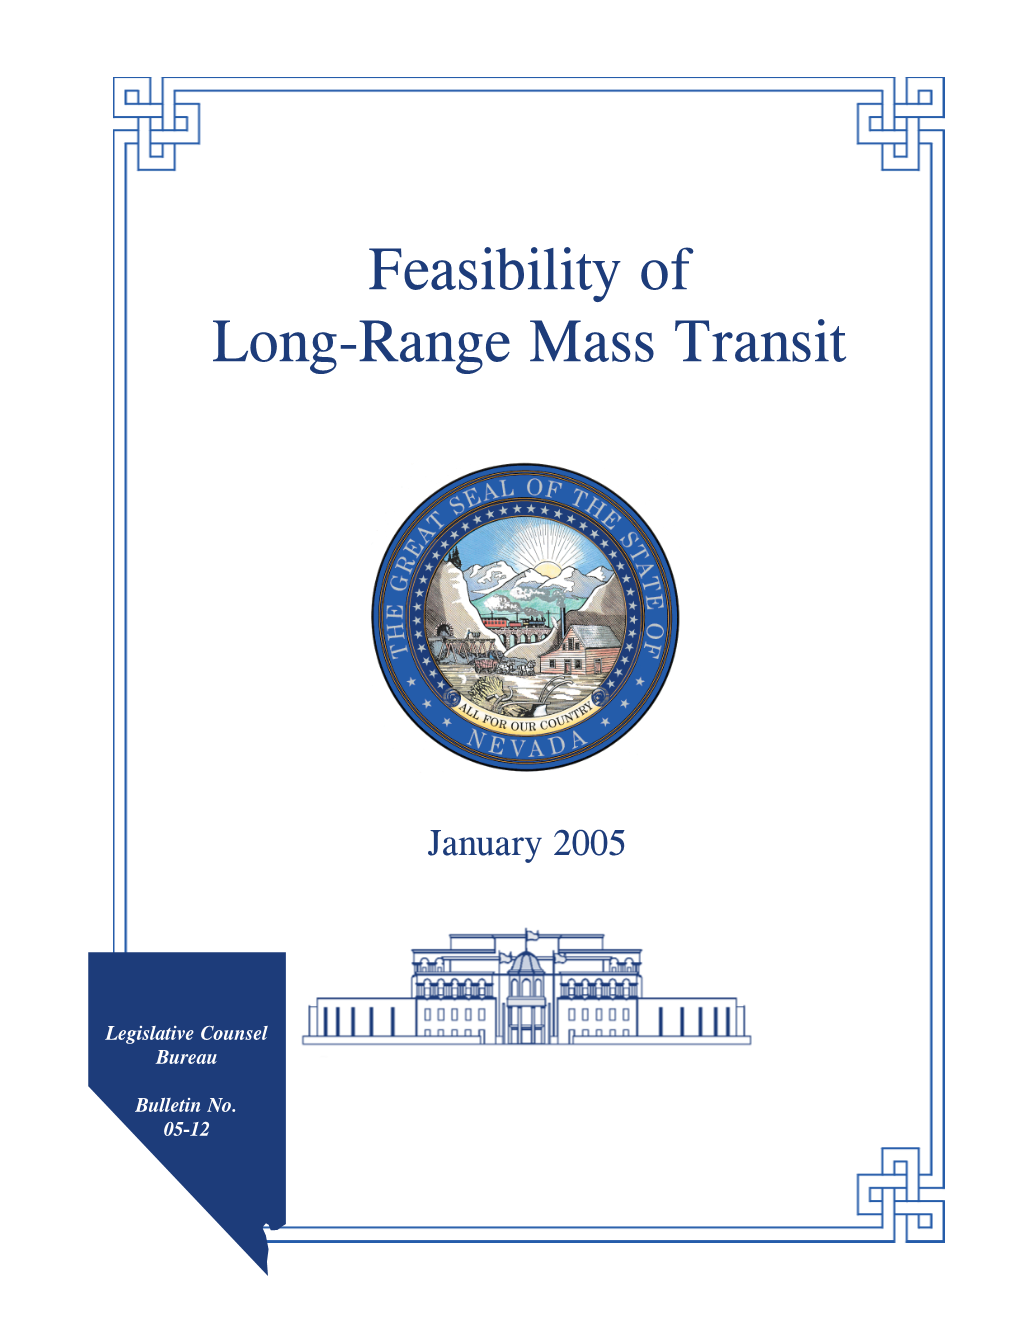 Bulletin 05-12 Feasibility of Long-Range Mass Transit